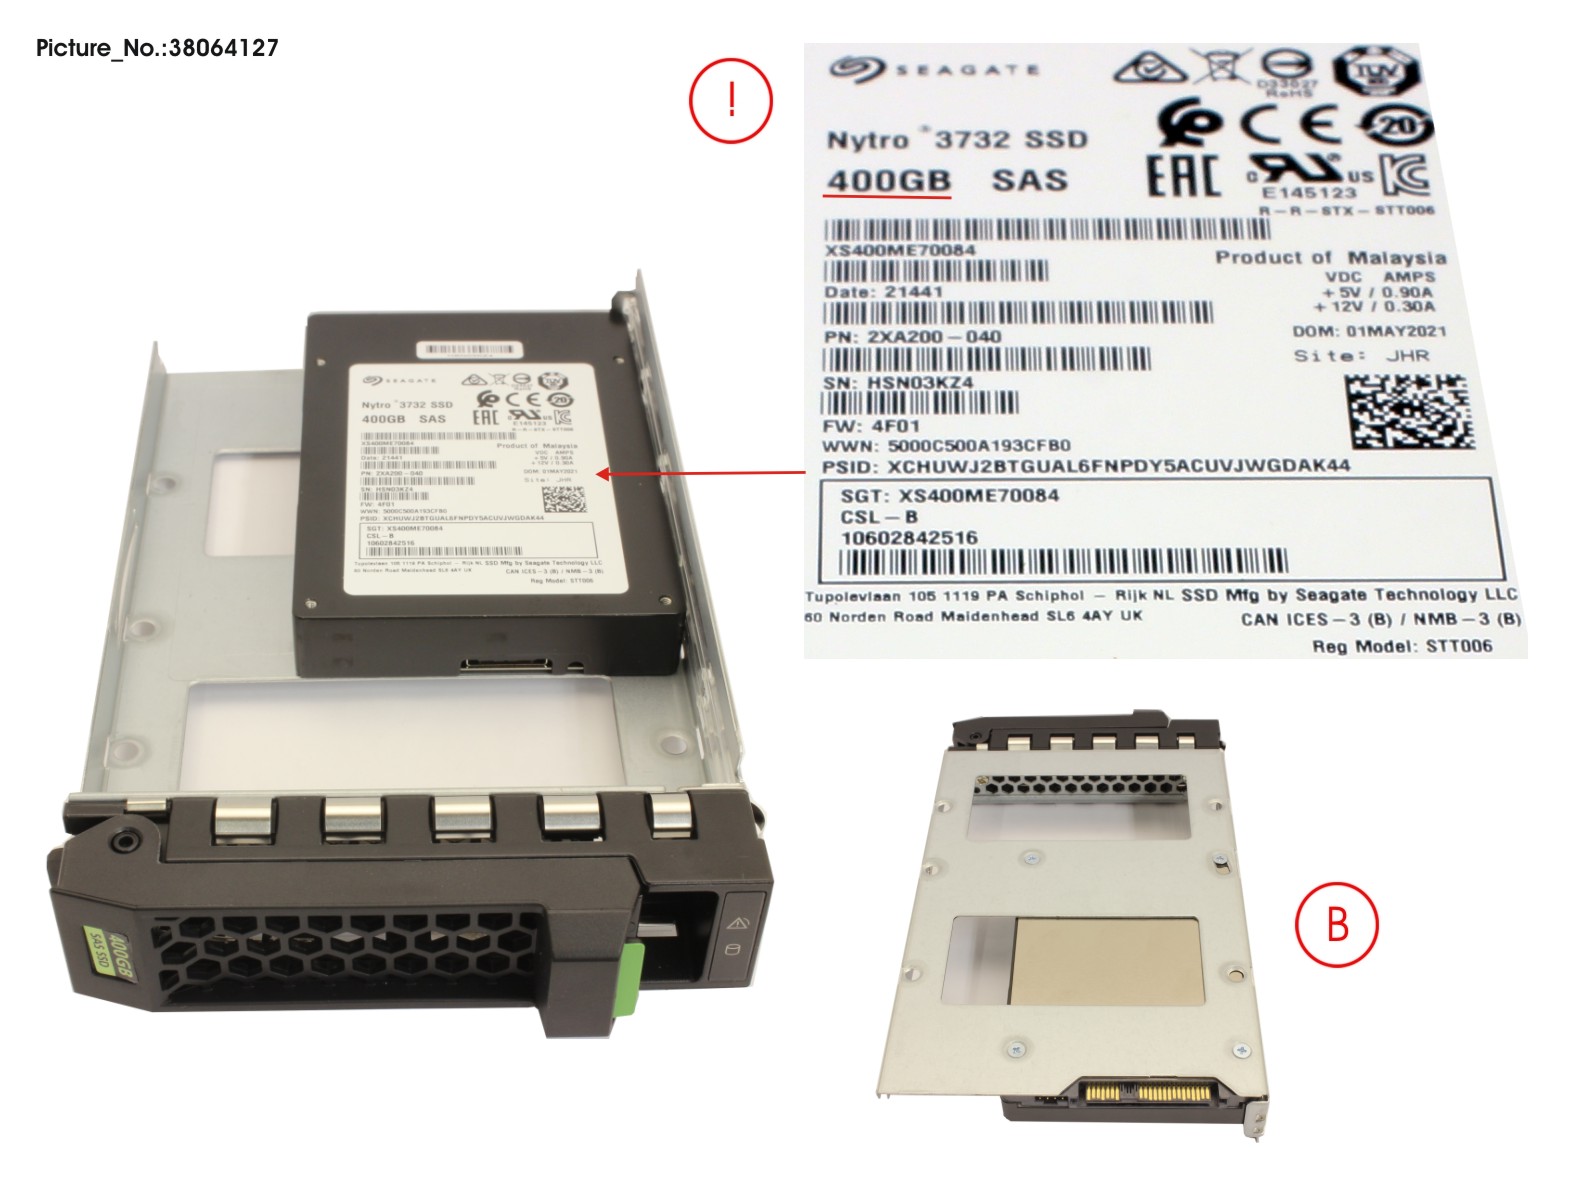 SSD SAS 12G WI 400GB IN LFF SLIM